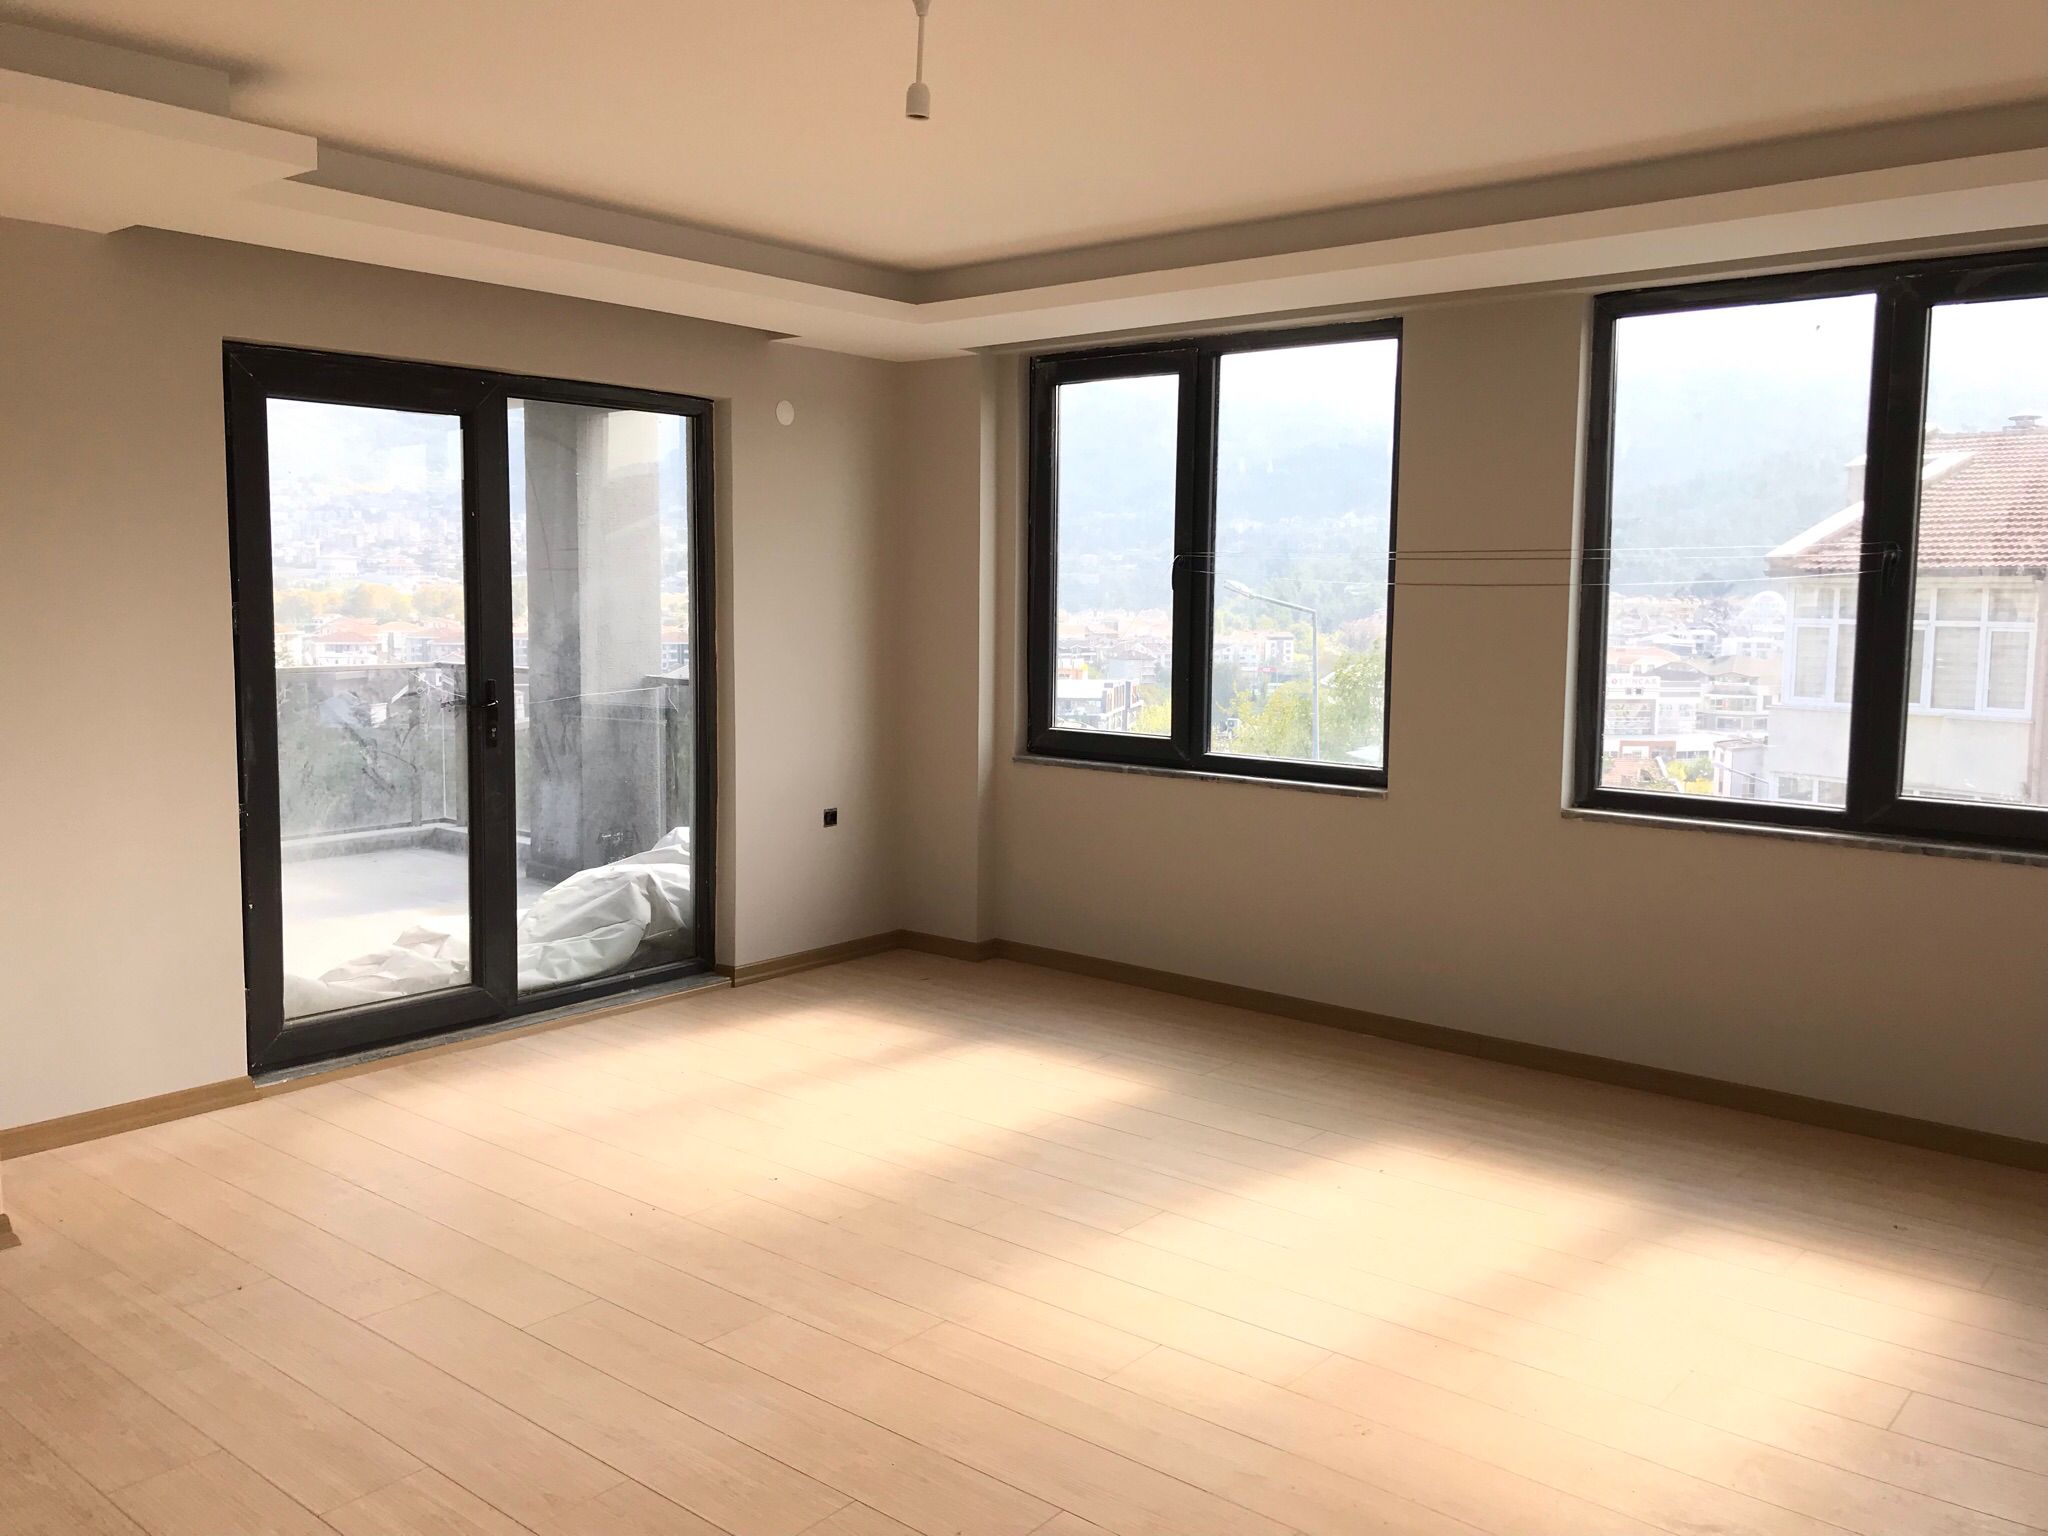 Landscape view 3+1 Flat for sale in Bursa (First floor)